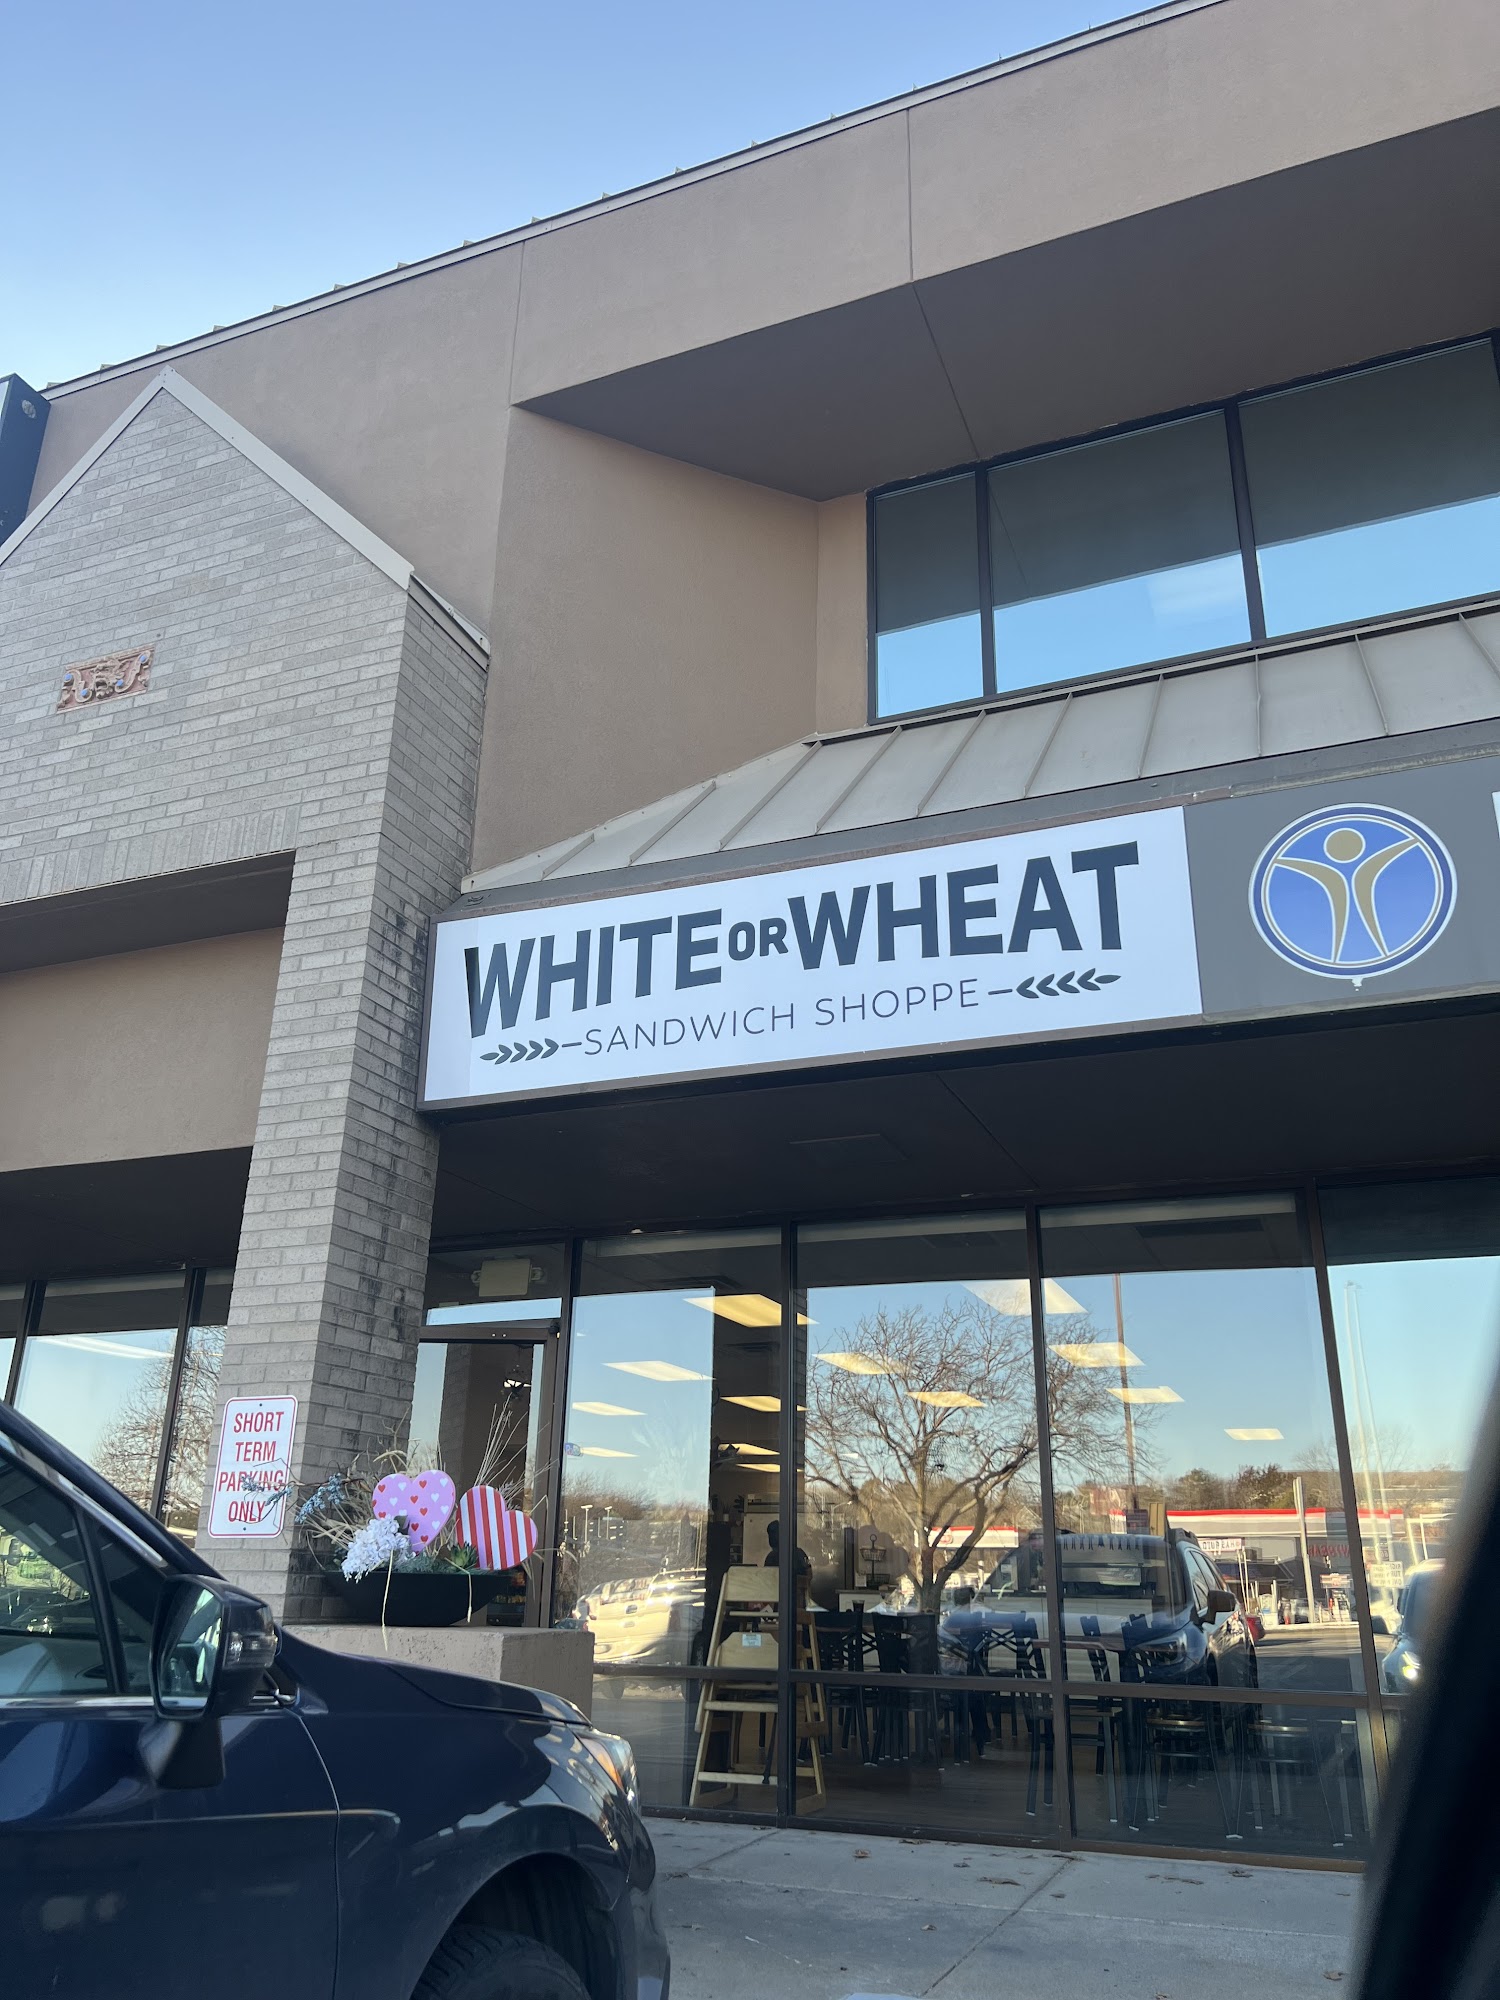 White Or Wheat Sandwich Shoppe